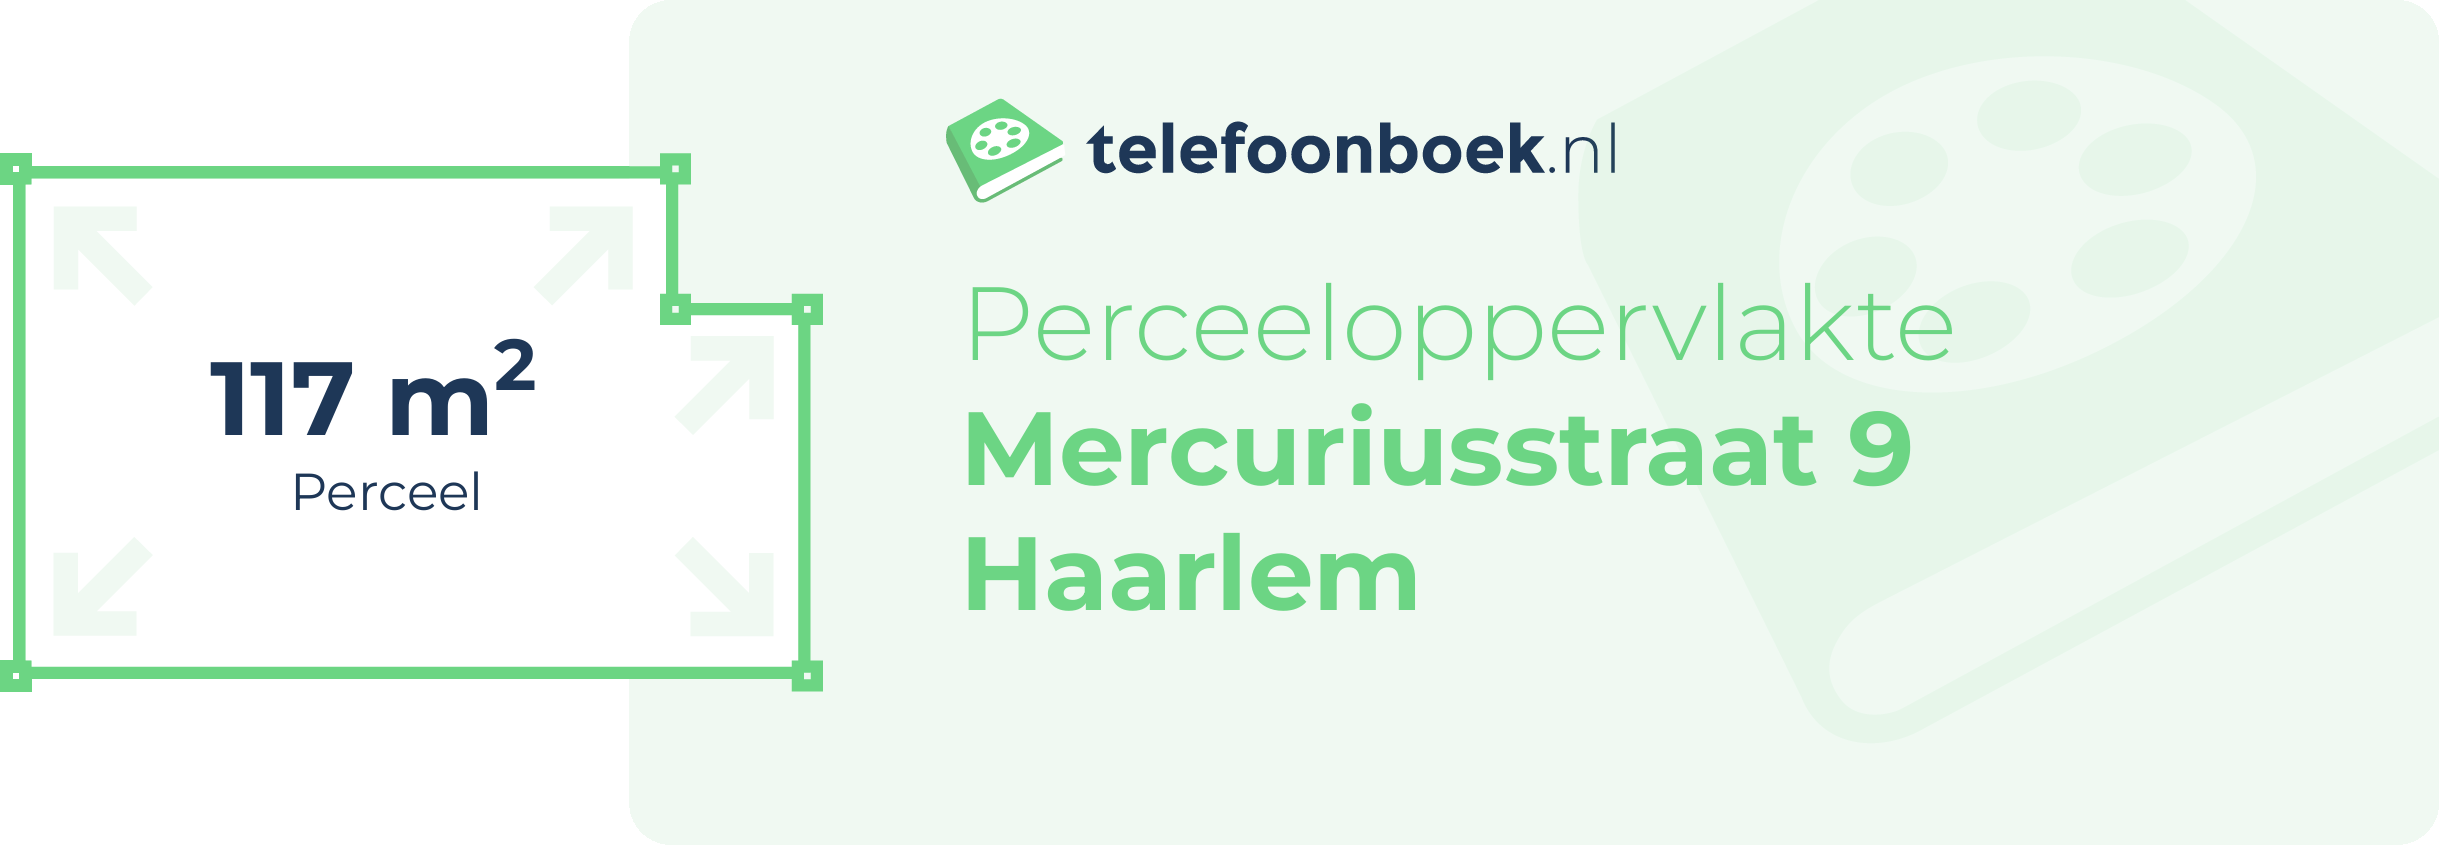 Perceeloppervlakte Mercuriusstraat 9 Haarlem